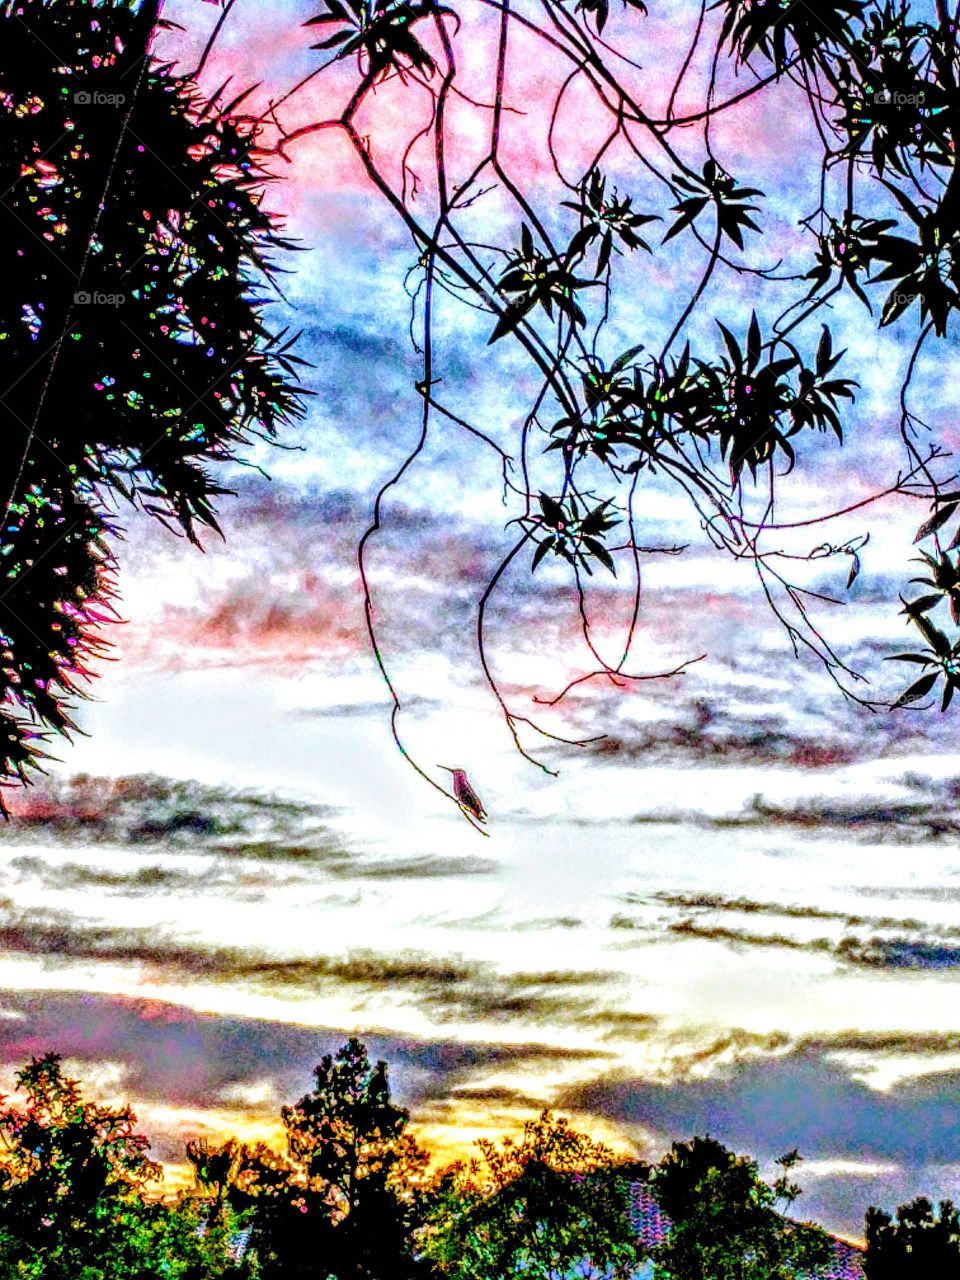 Hummingbird Sunset